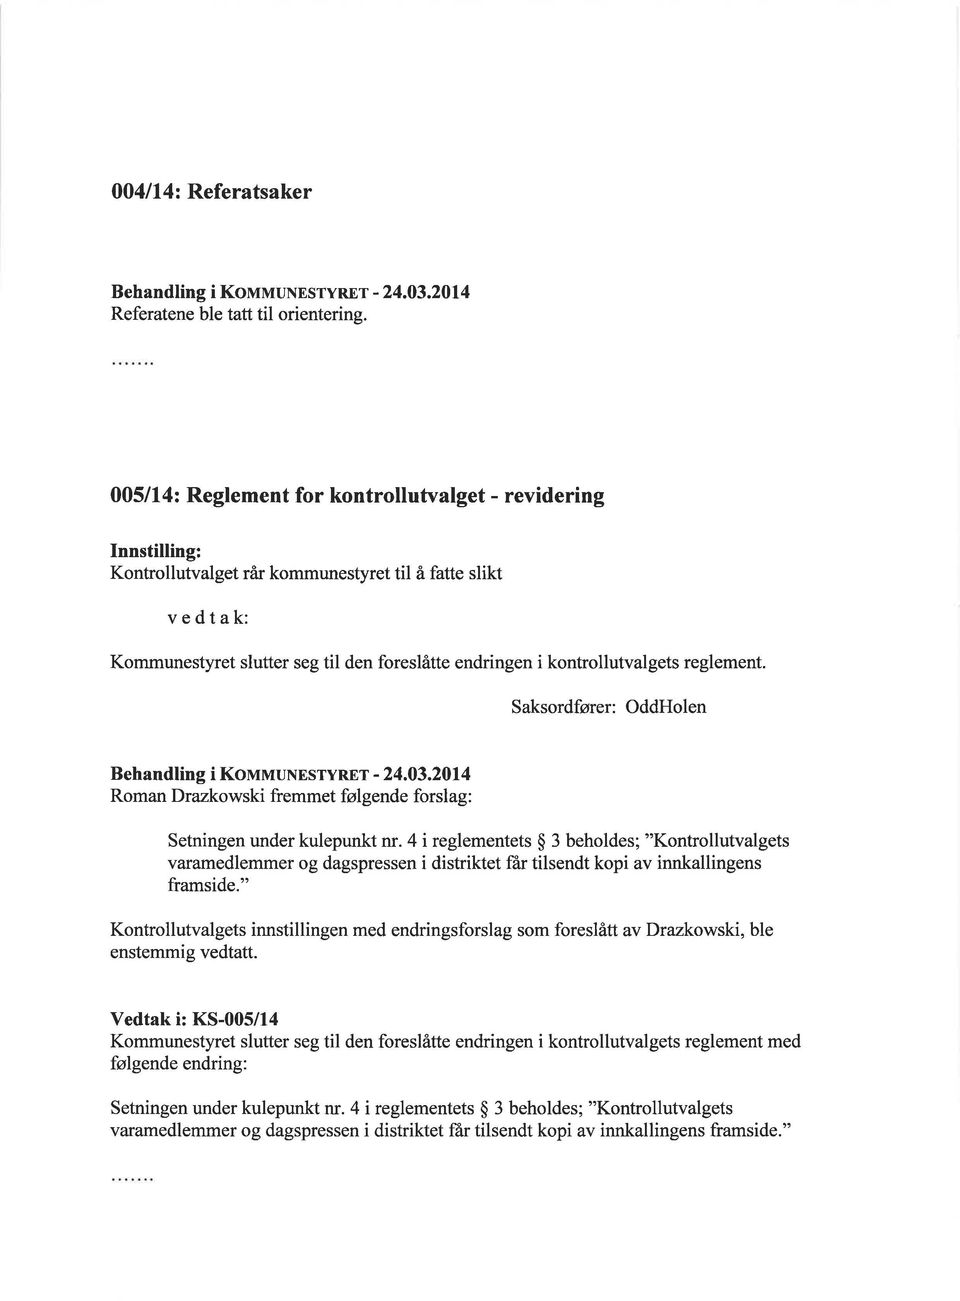 Saksordfører: OddHolen Behandling i KouvruNESryREr - 24.03.2014 Roman Drazkowski fremmet følgende forslag: Setningen under kulepunkt nr.